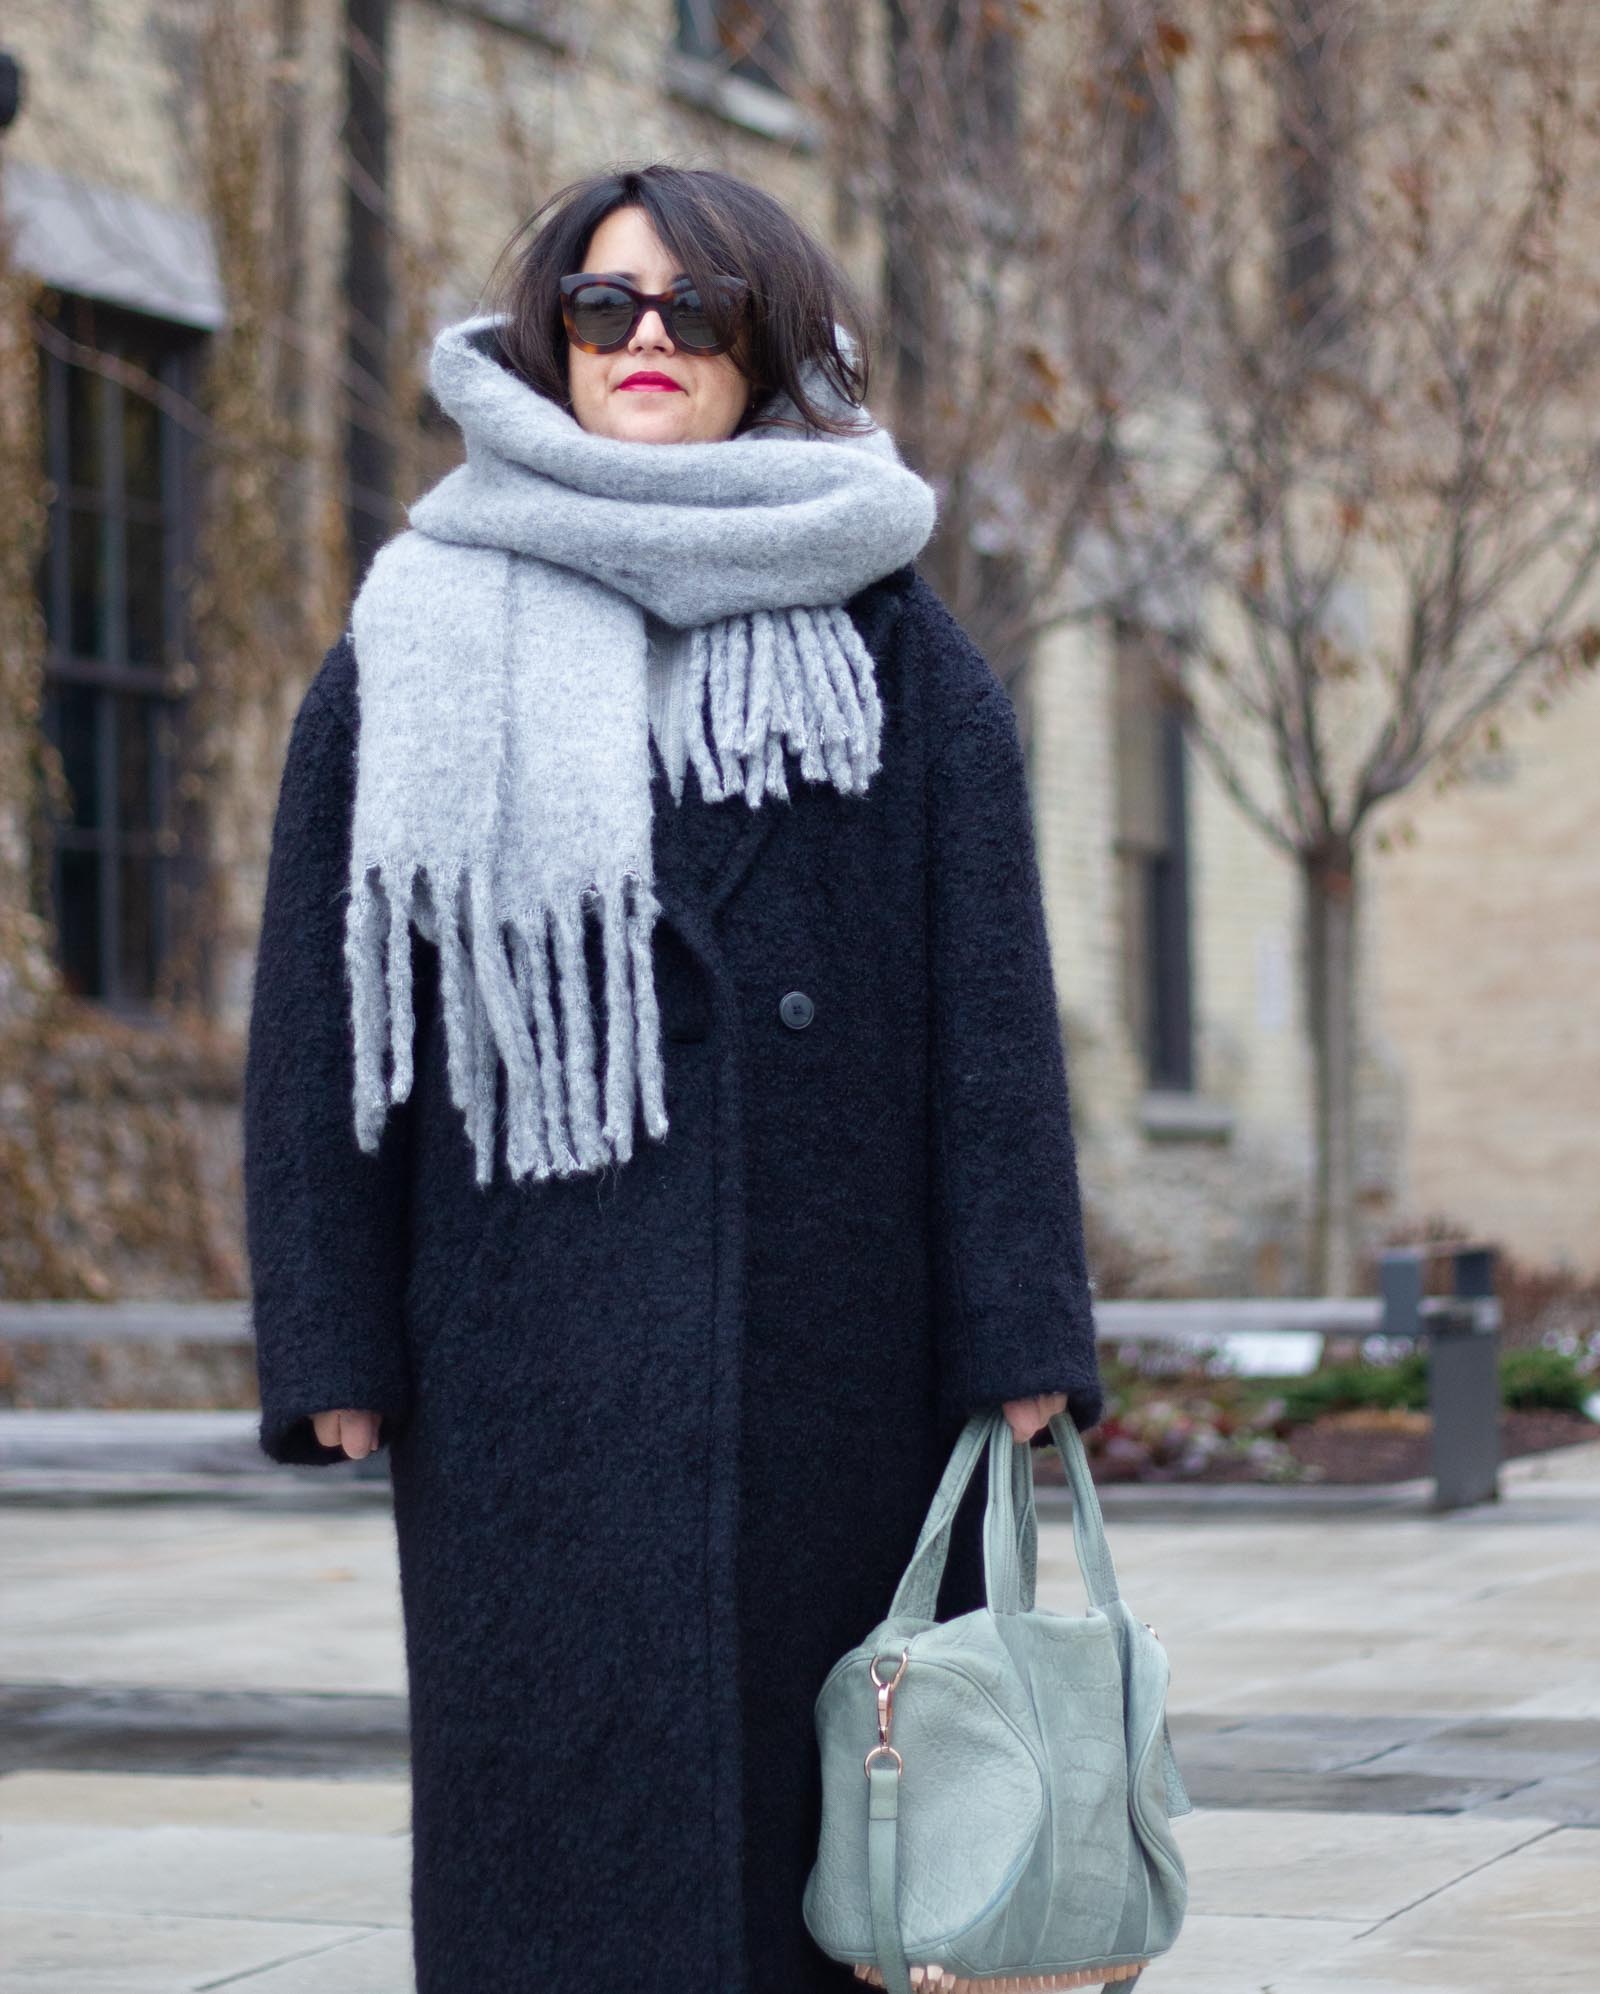 black coat with grey accents, fuzzy grey scarf, rocco bag